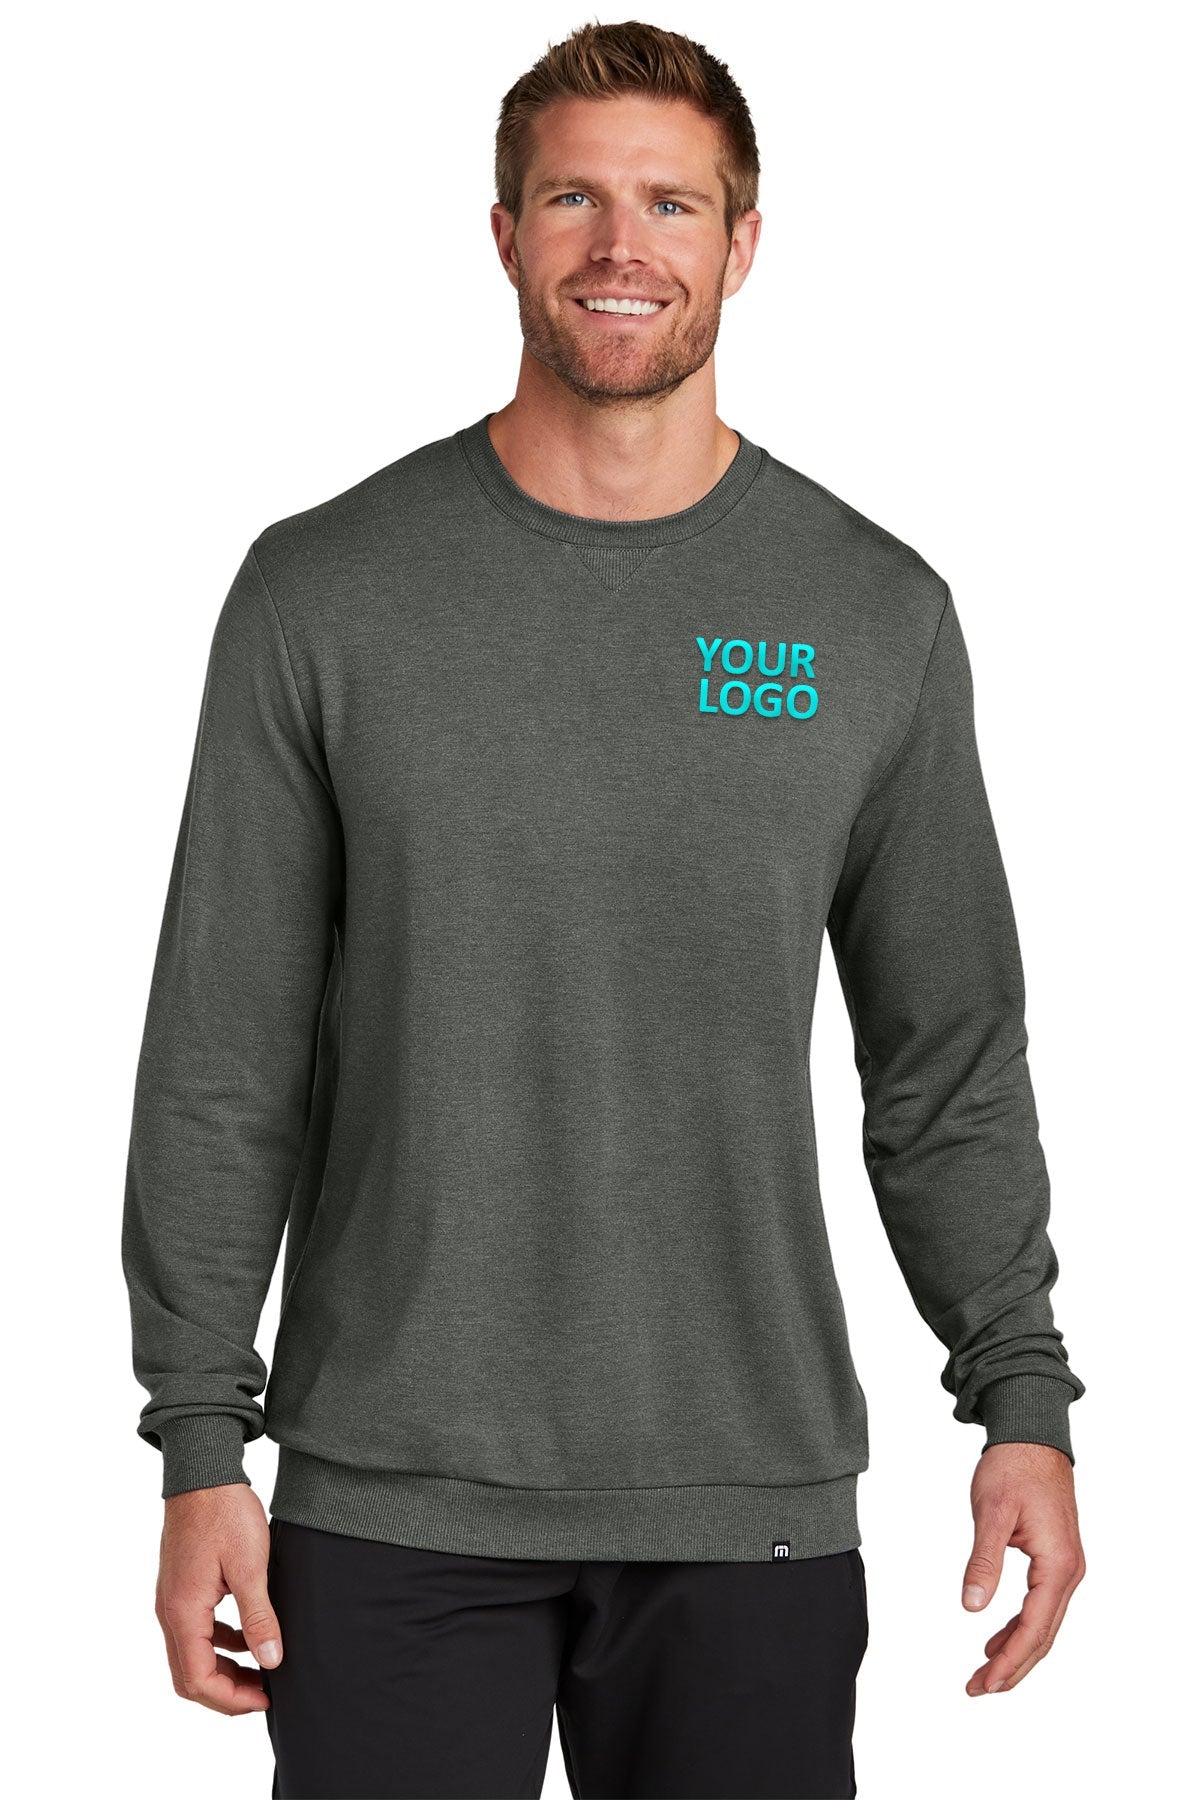 business sweatshirts with logo